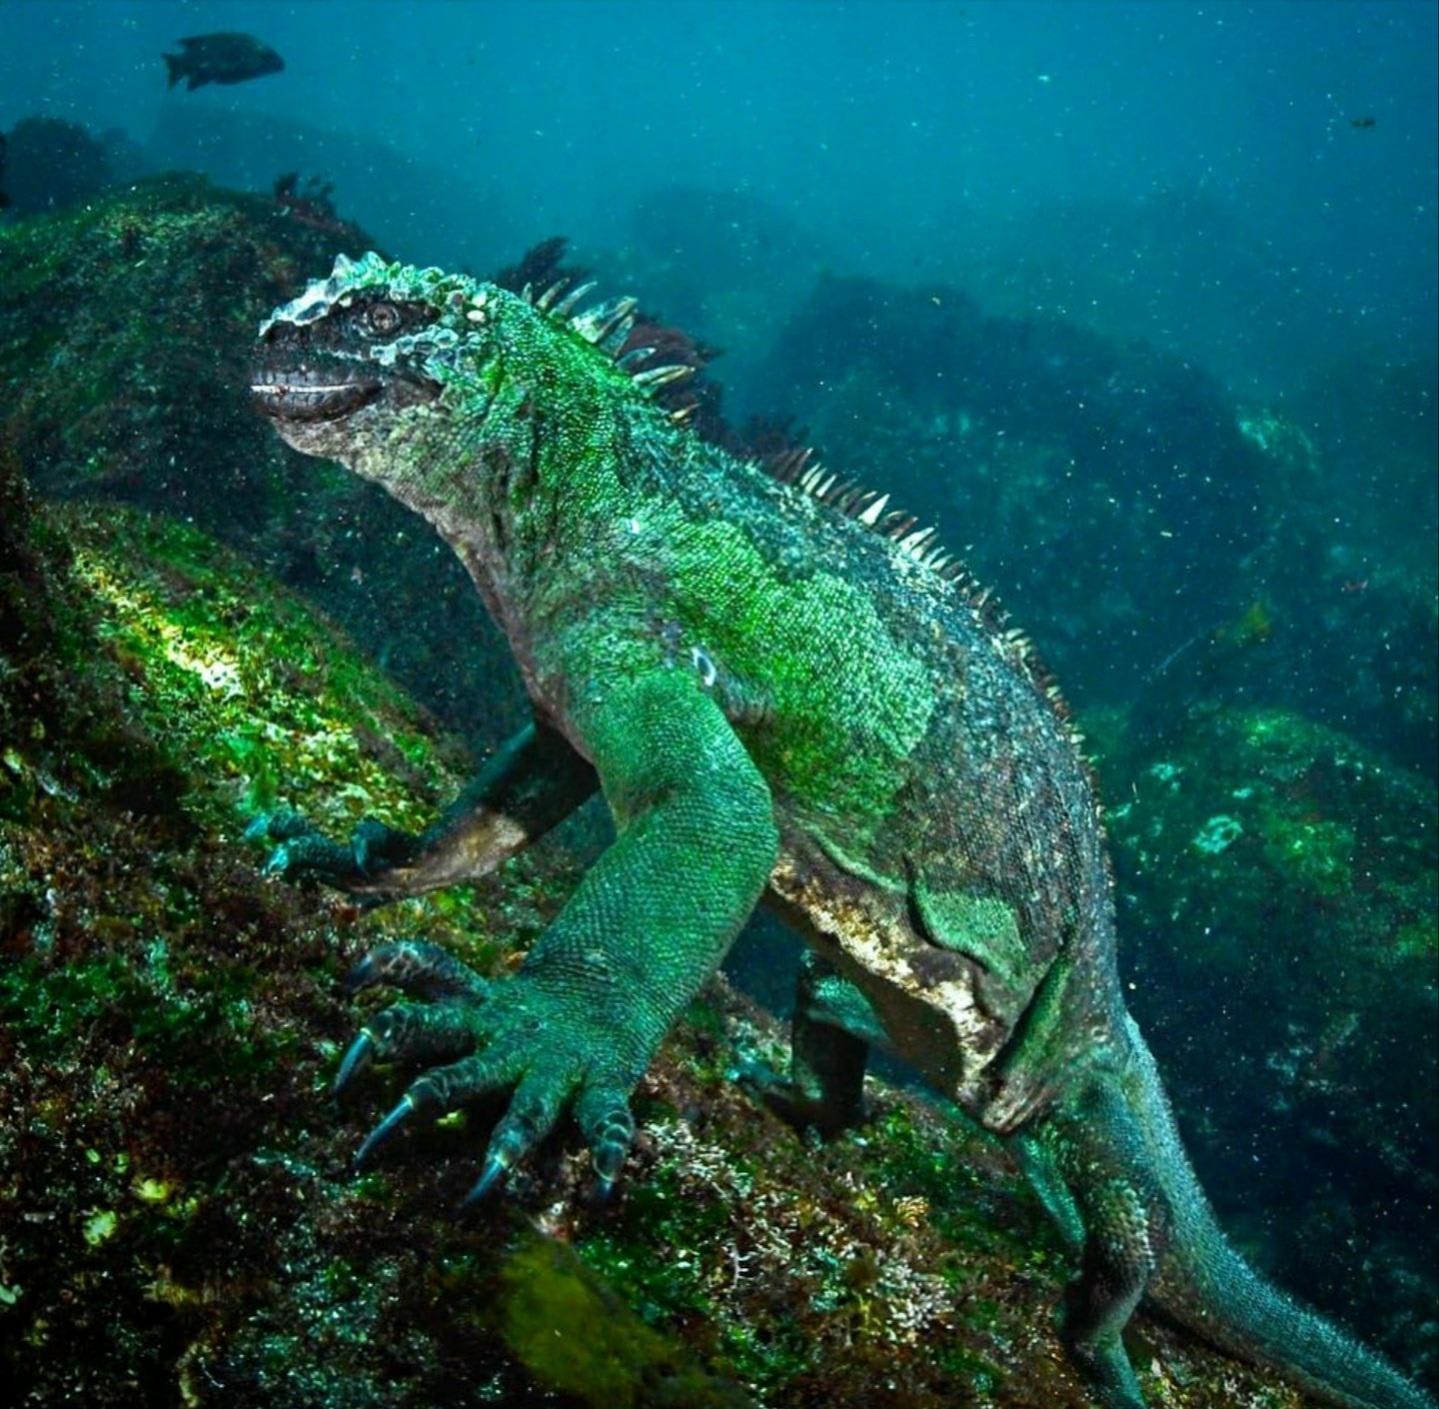 A Galápagos marine Iguana